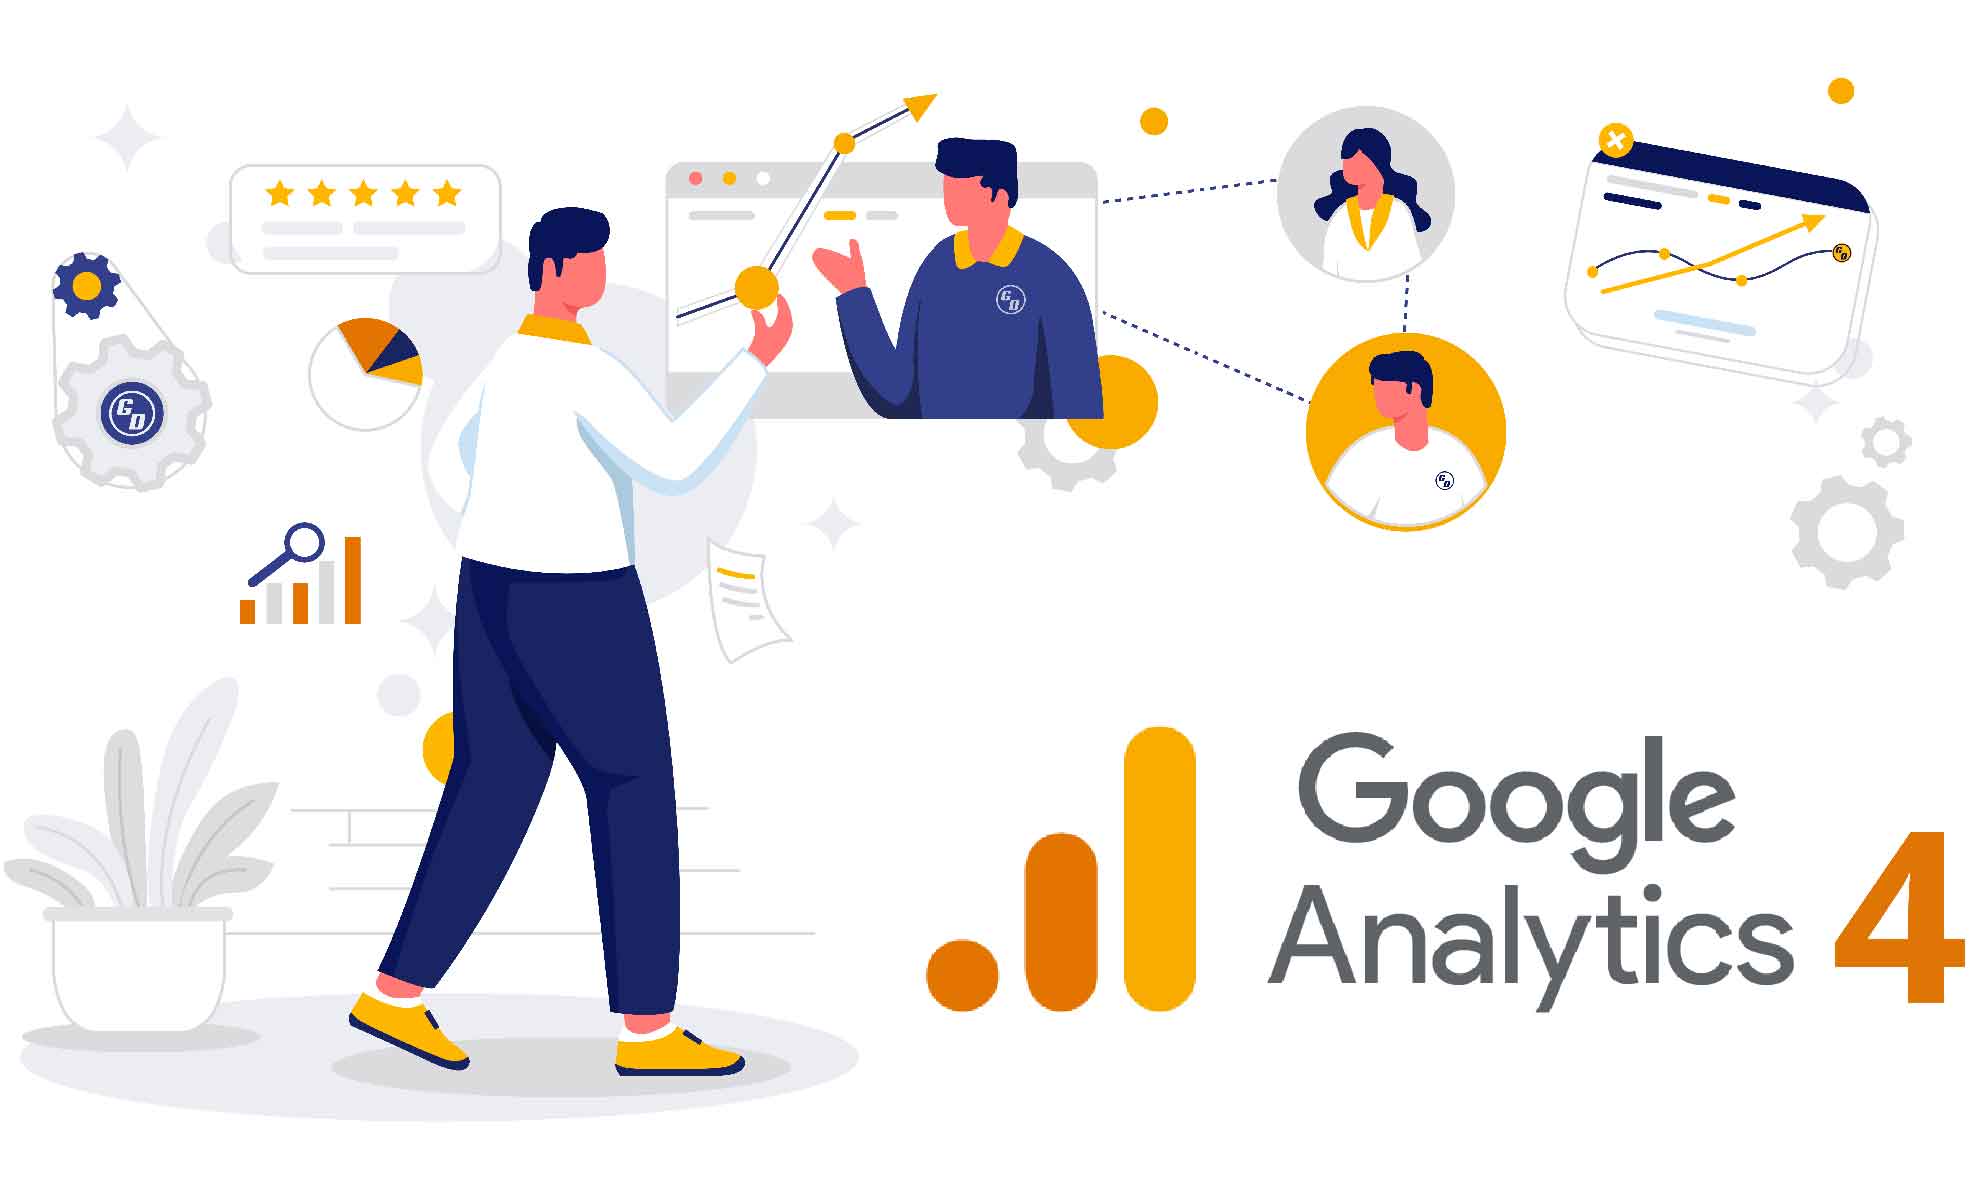 Google is Offering free Google Analytics 4 (GA4) Training Course